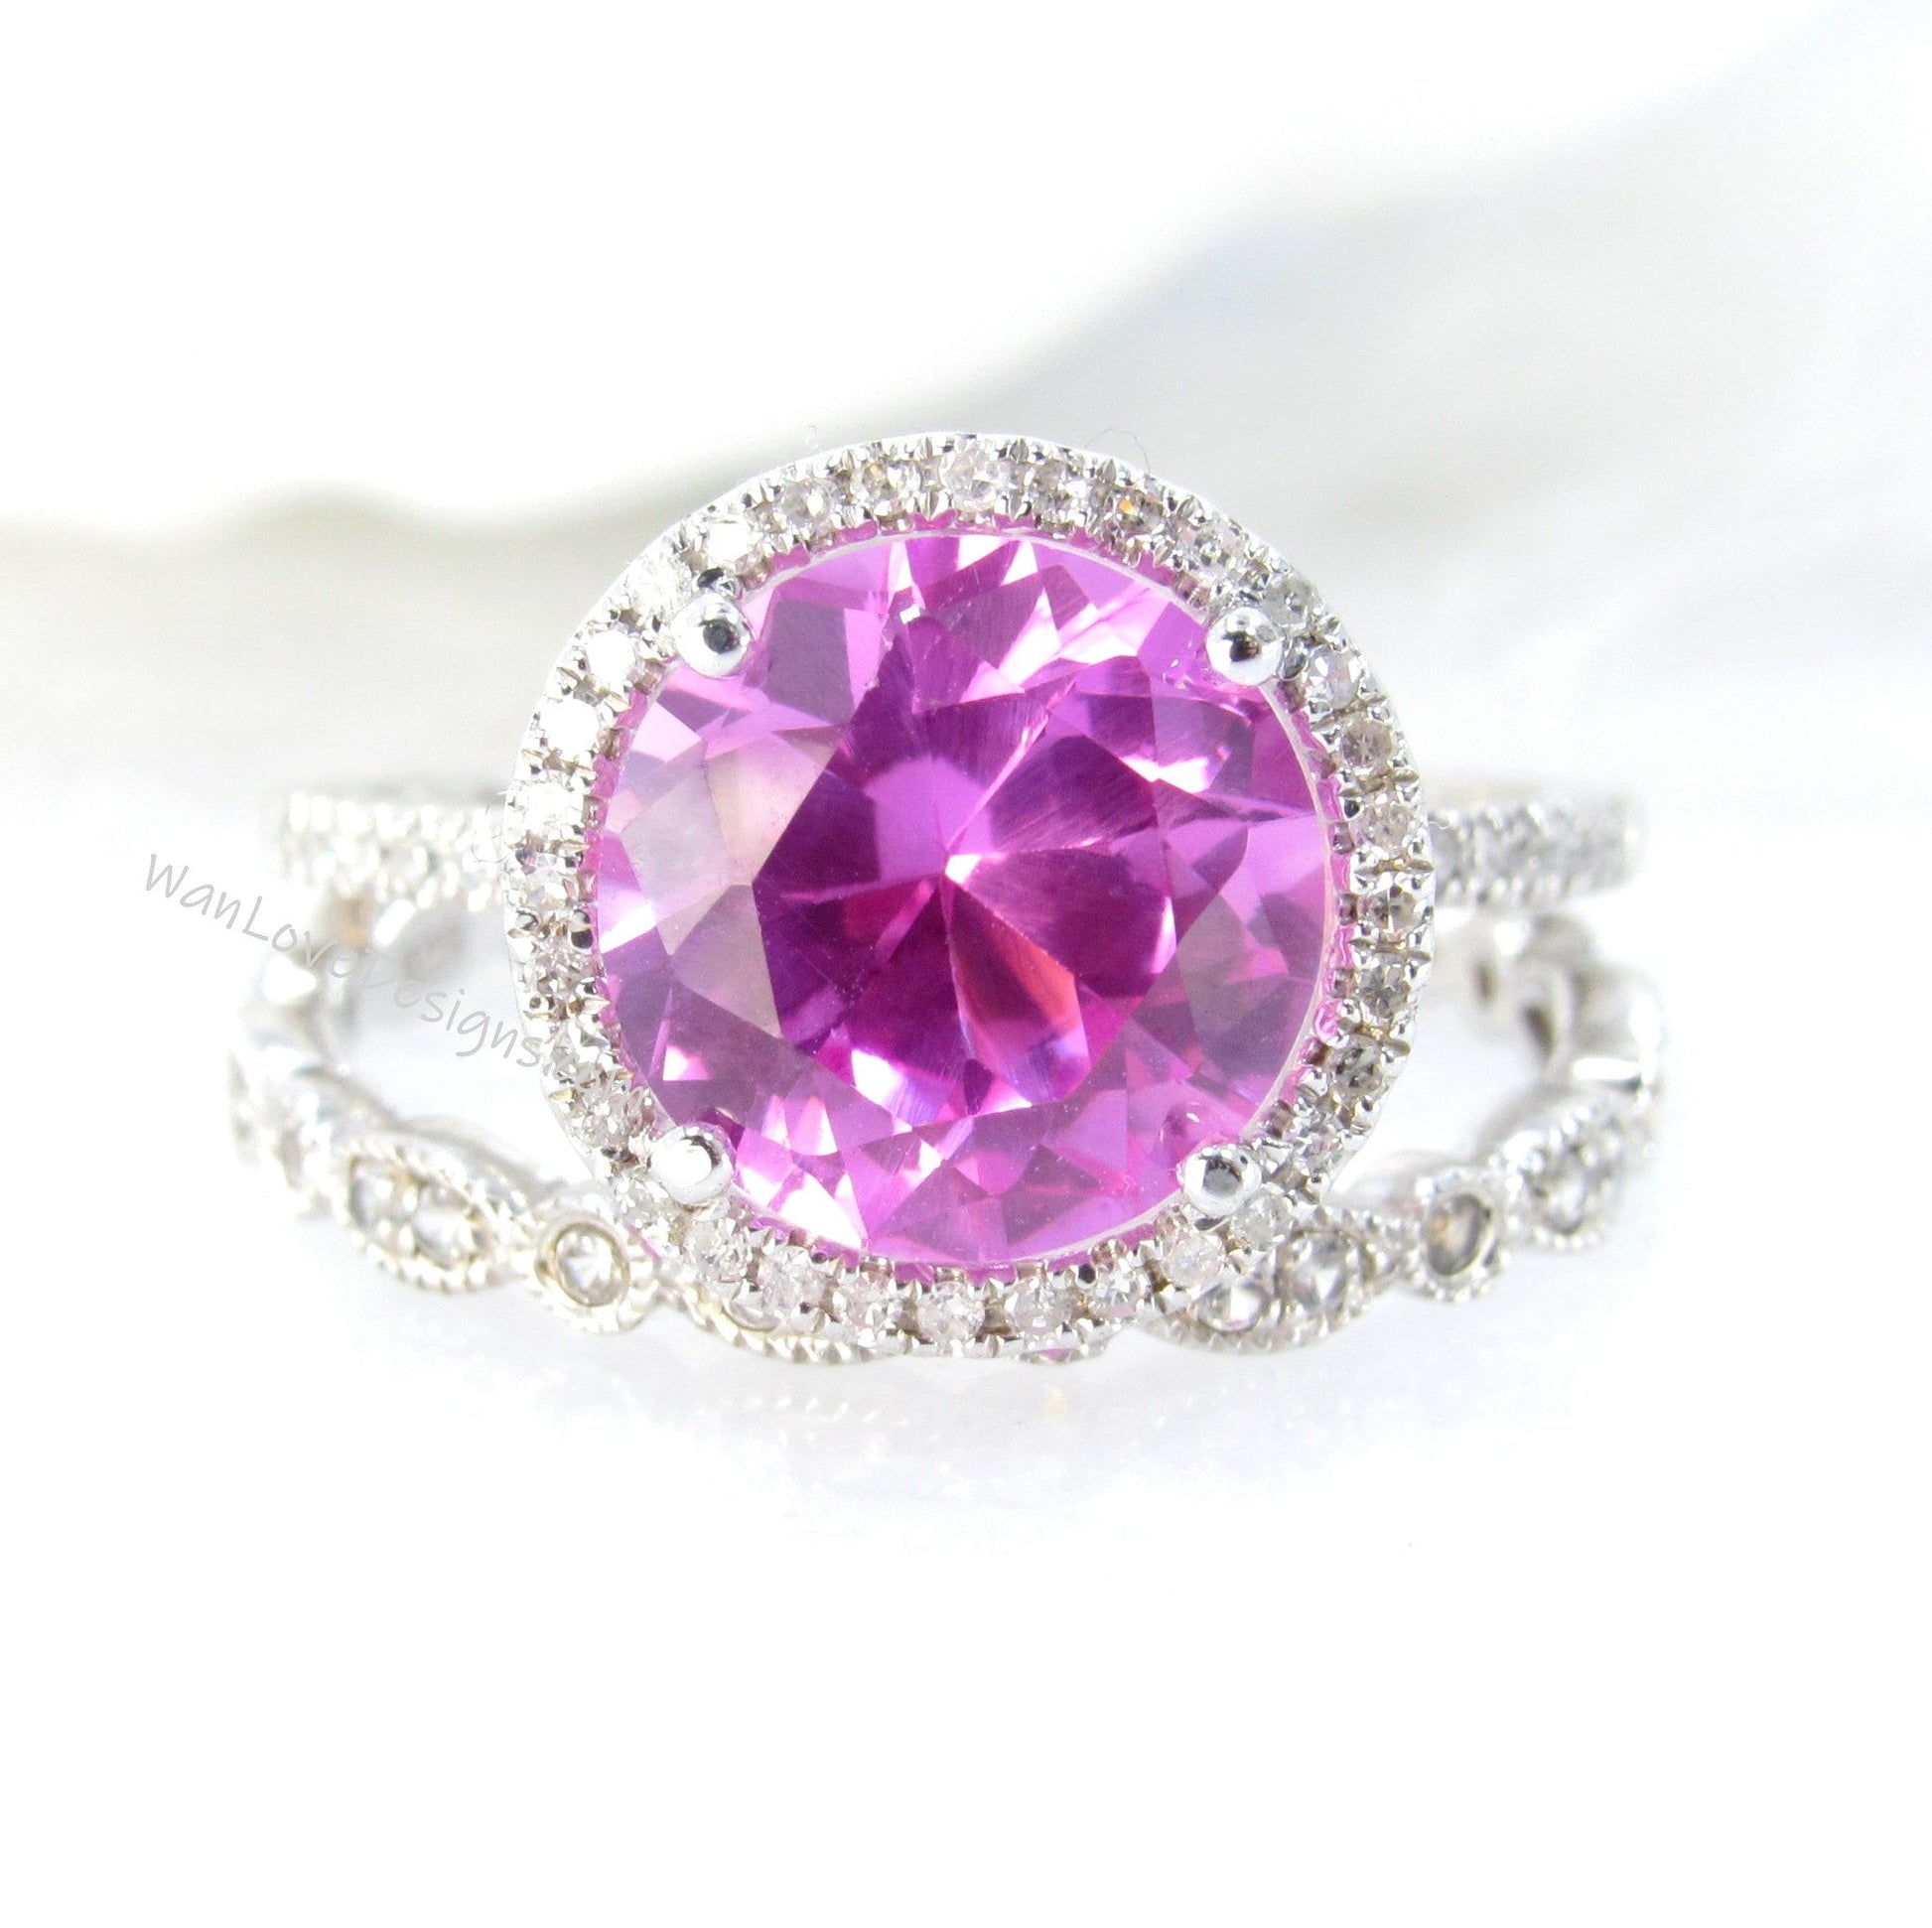 3ct Pink Sapphire Diamond Halo Engagement Ring Set Round halo Full Eternity art deco Milgrain Leaf Wedding Band set vintage bridal jewelry Wan Love Designs